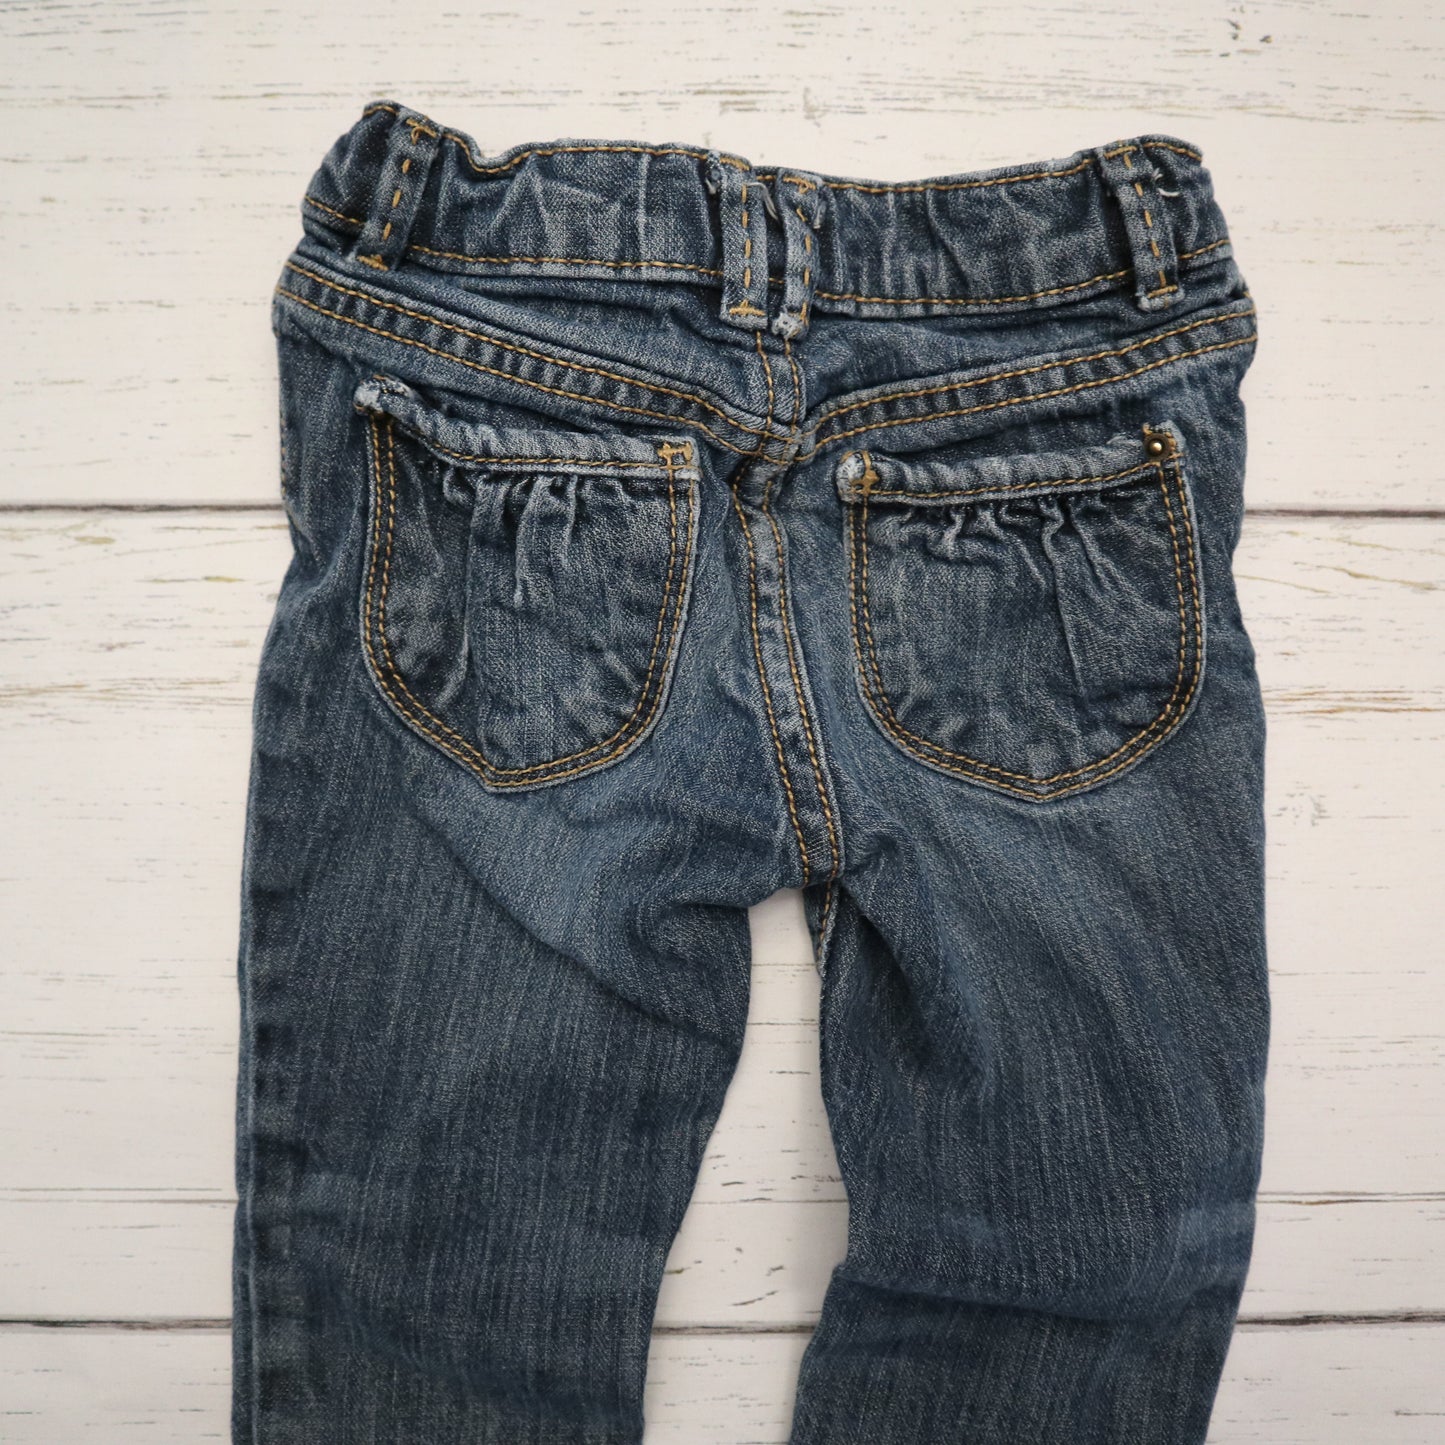 Gap - Jeans (2T)